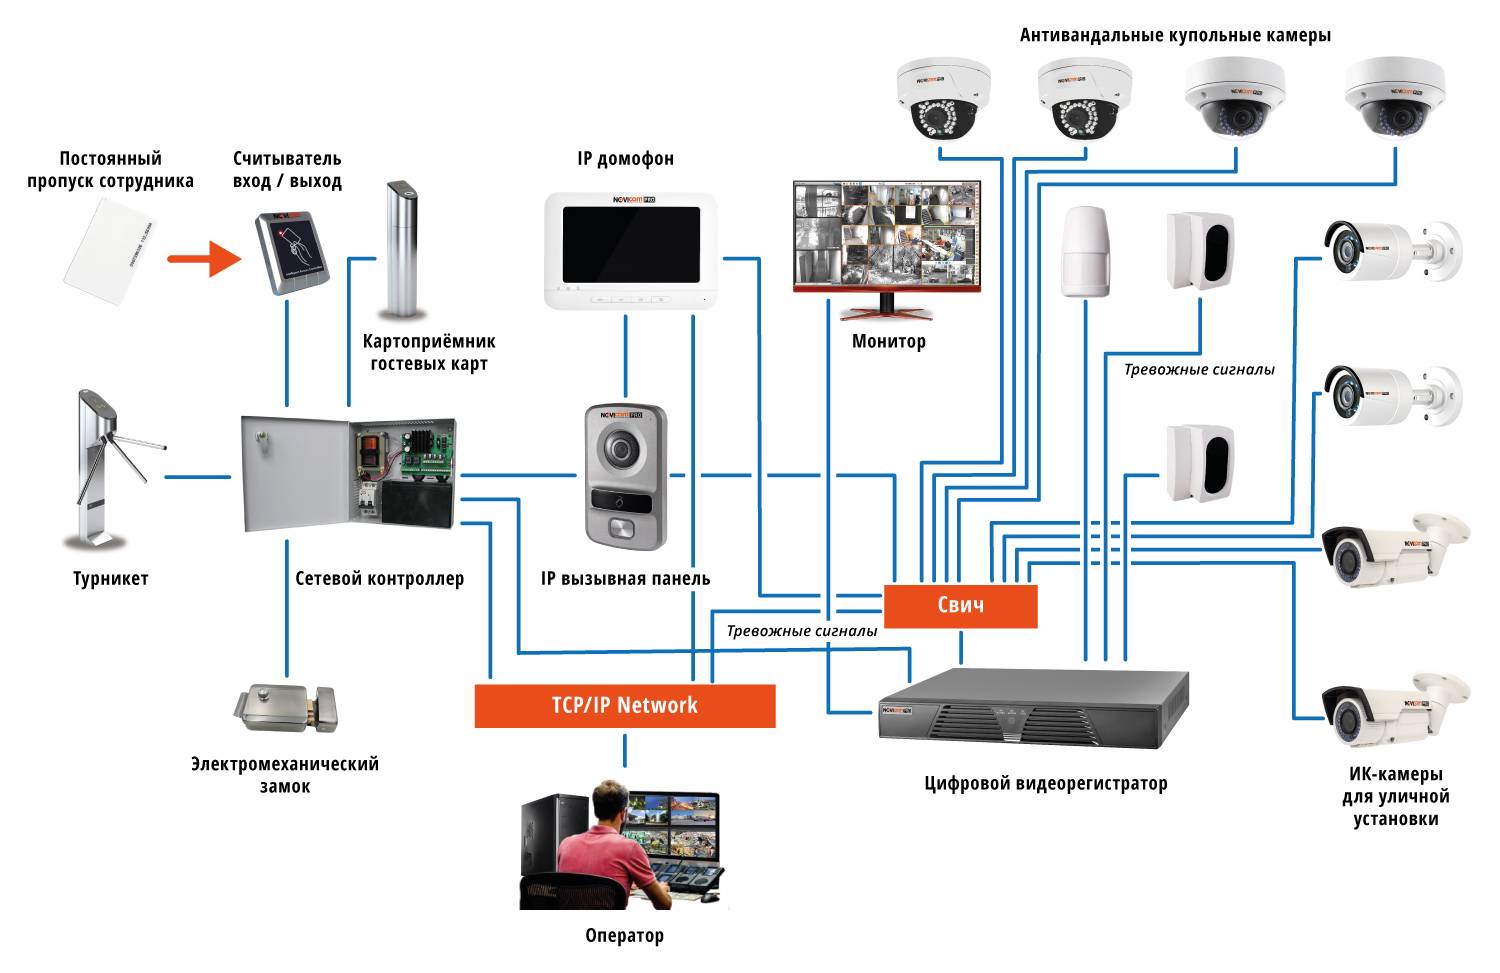 Установка и настройка видеонаблюдения
установка и настройка видеонаблюдения